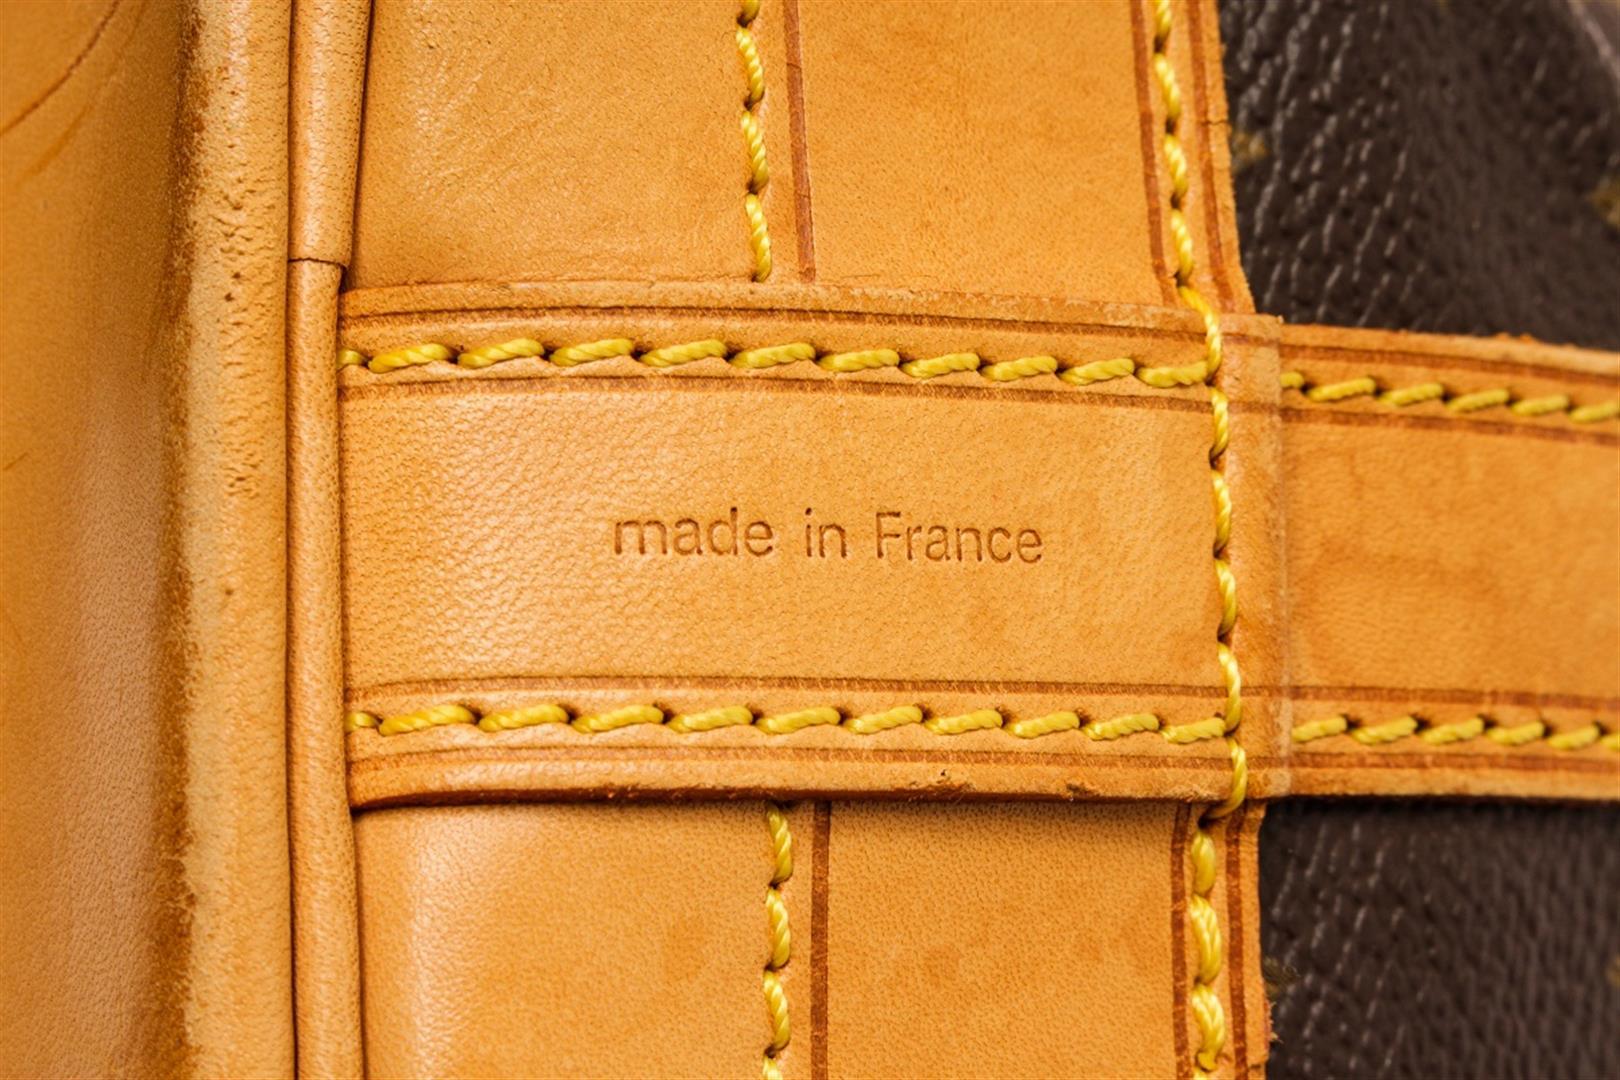 Louis Vuitton Brown Monogram Noe PM Shoulder Bag